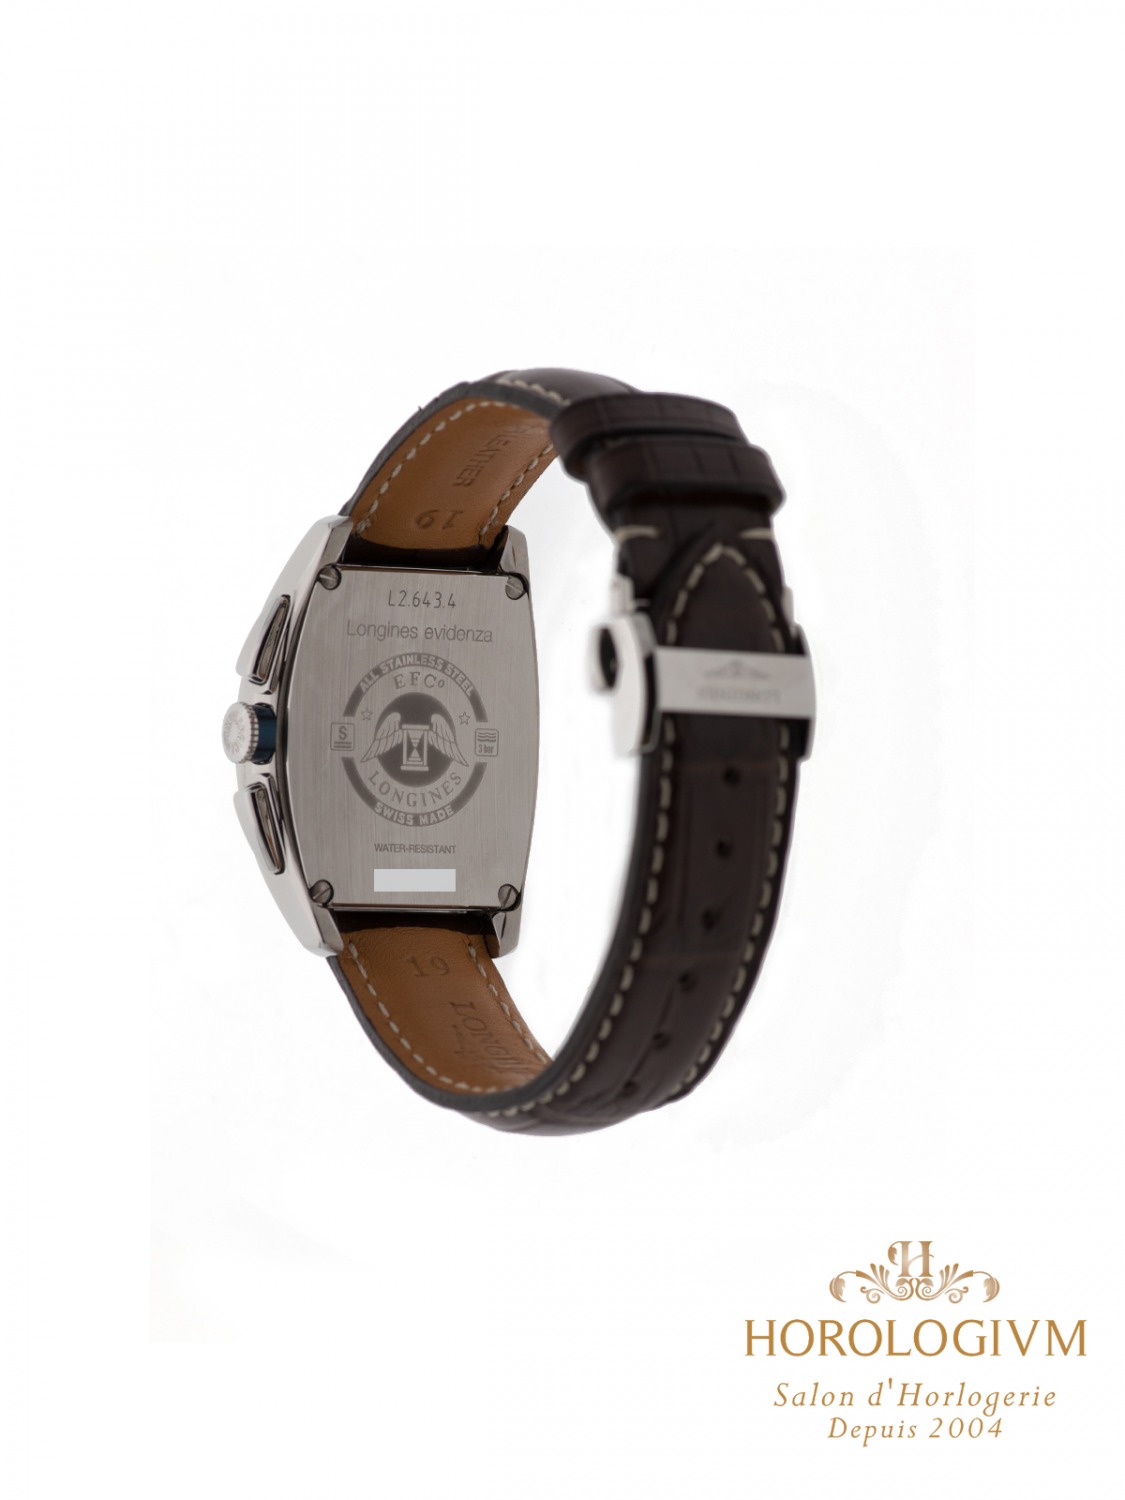 Longines Evidenza Chronograph Ref. L2.643.4 watch, silver